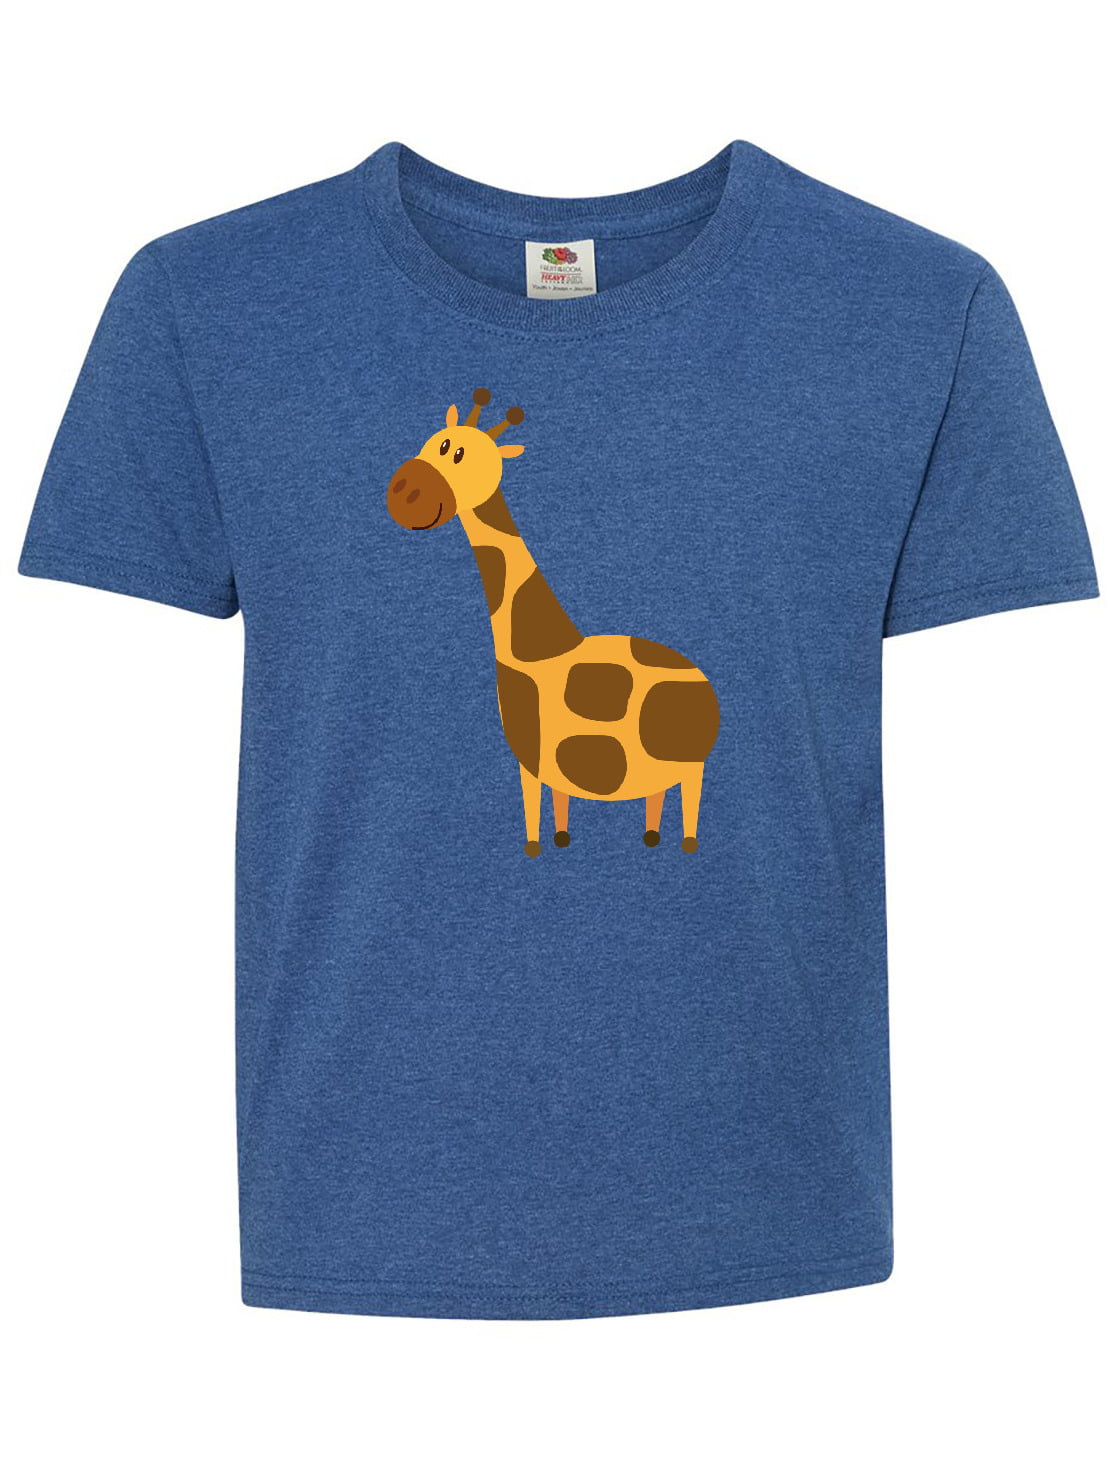 Giraffe Jungle Zoo Animal Youth T-Shirt - Walmart.com - Walmart.com